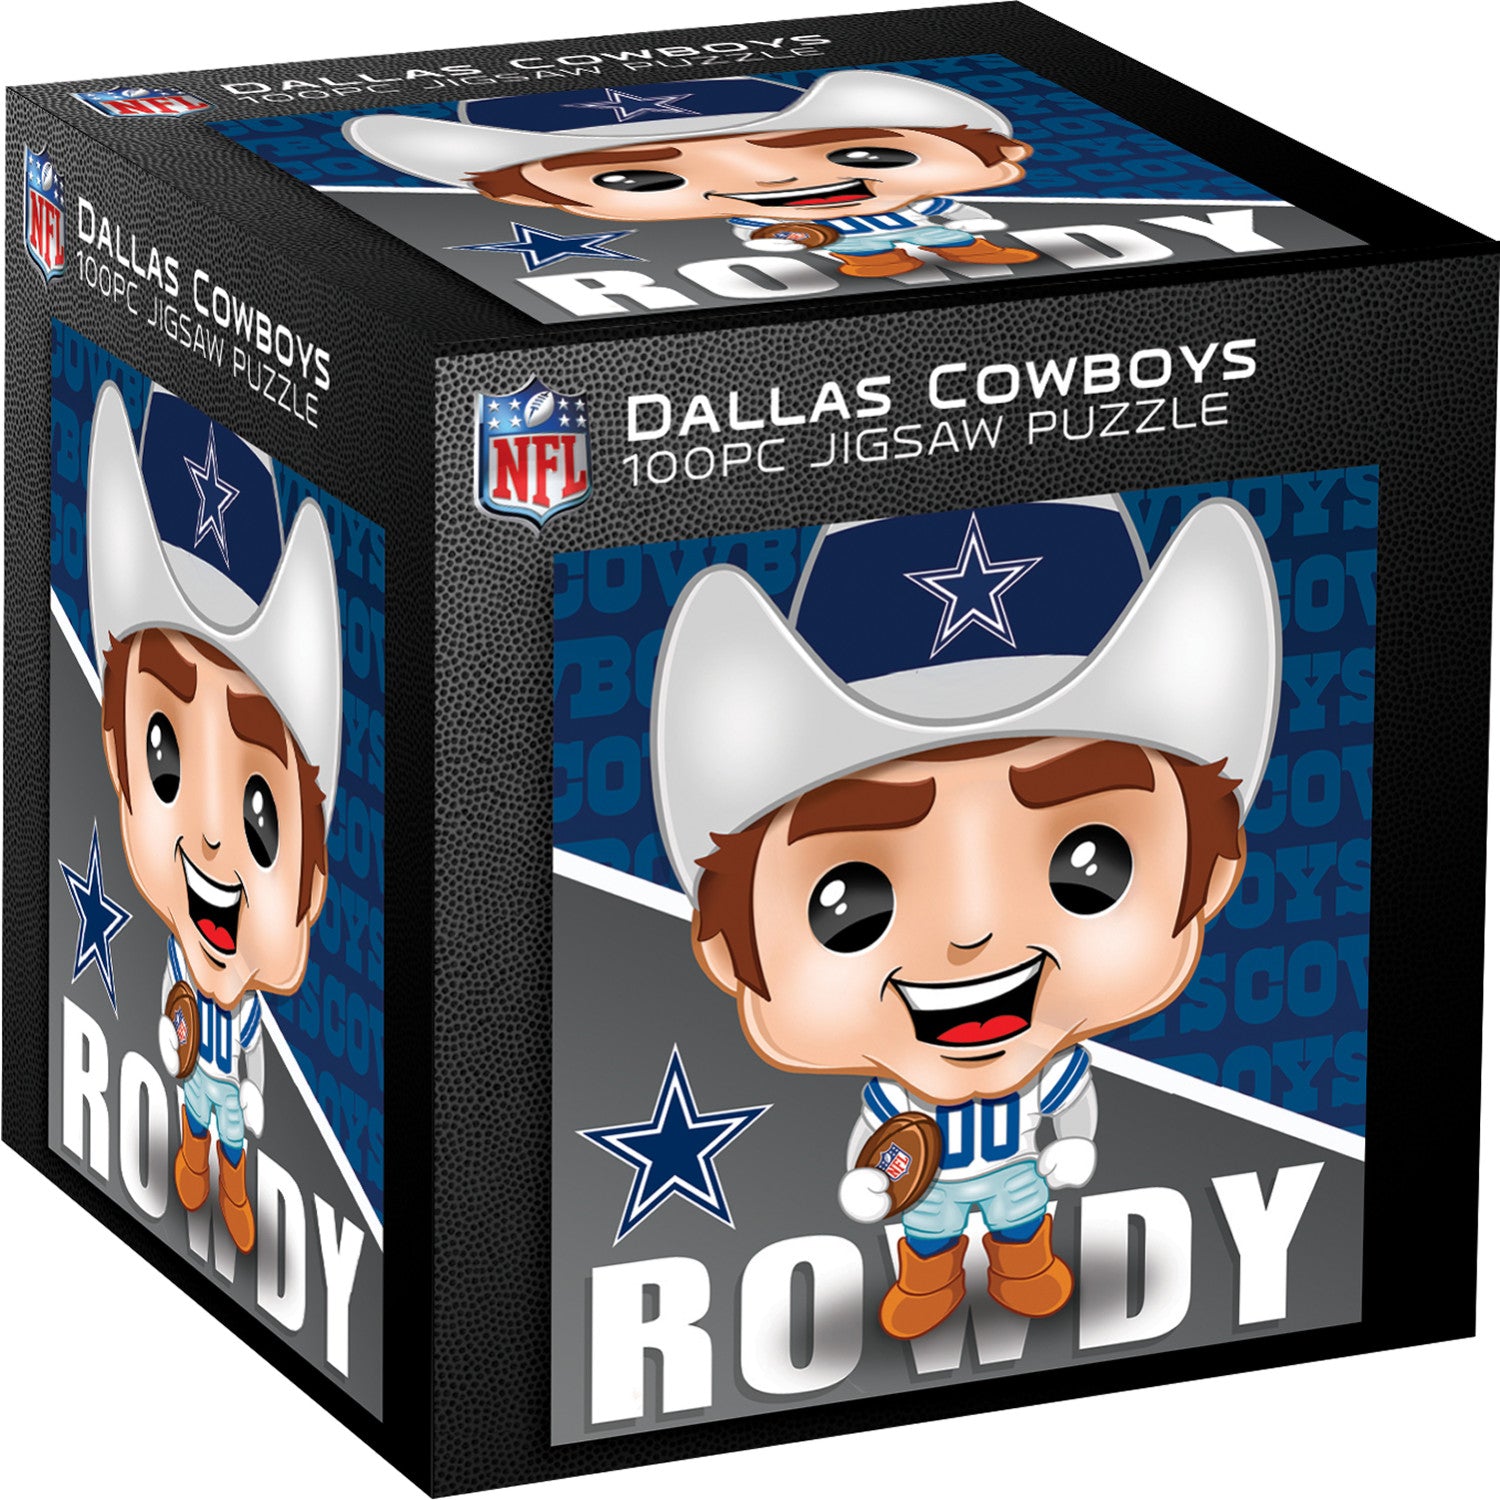 Rowdy - Dallas Cowboys Mascot 100 Piece Jigsaw Puzzle